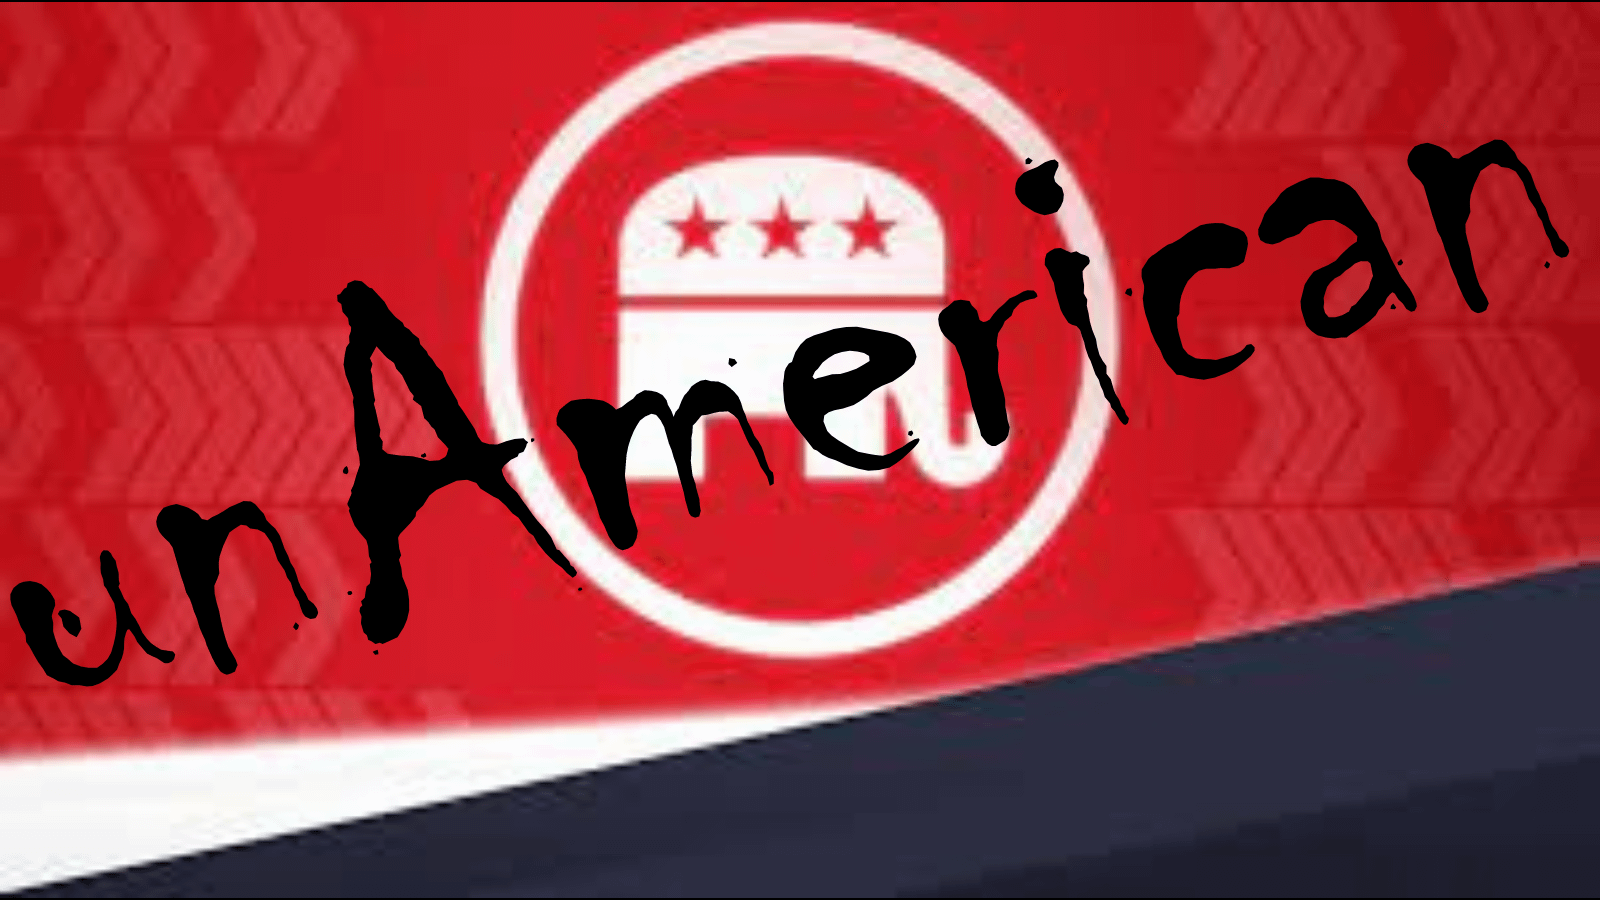 unAmerican! on GOP logo